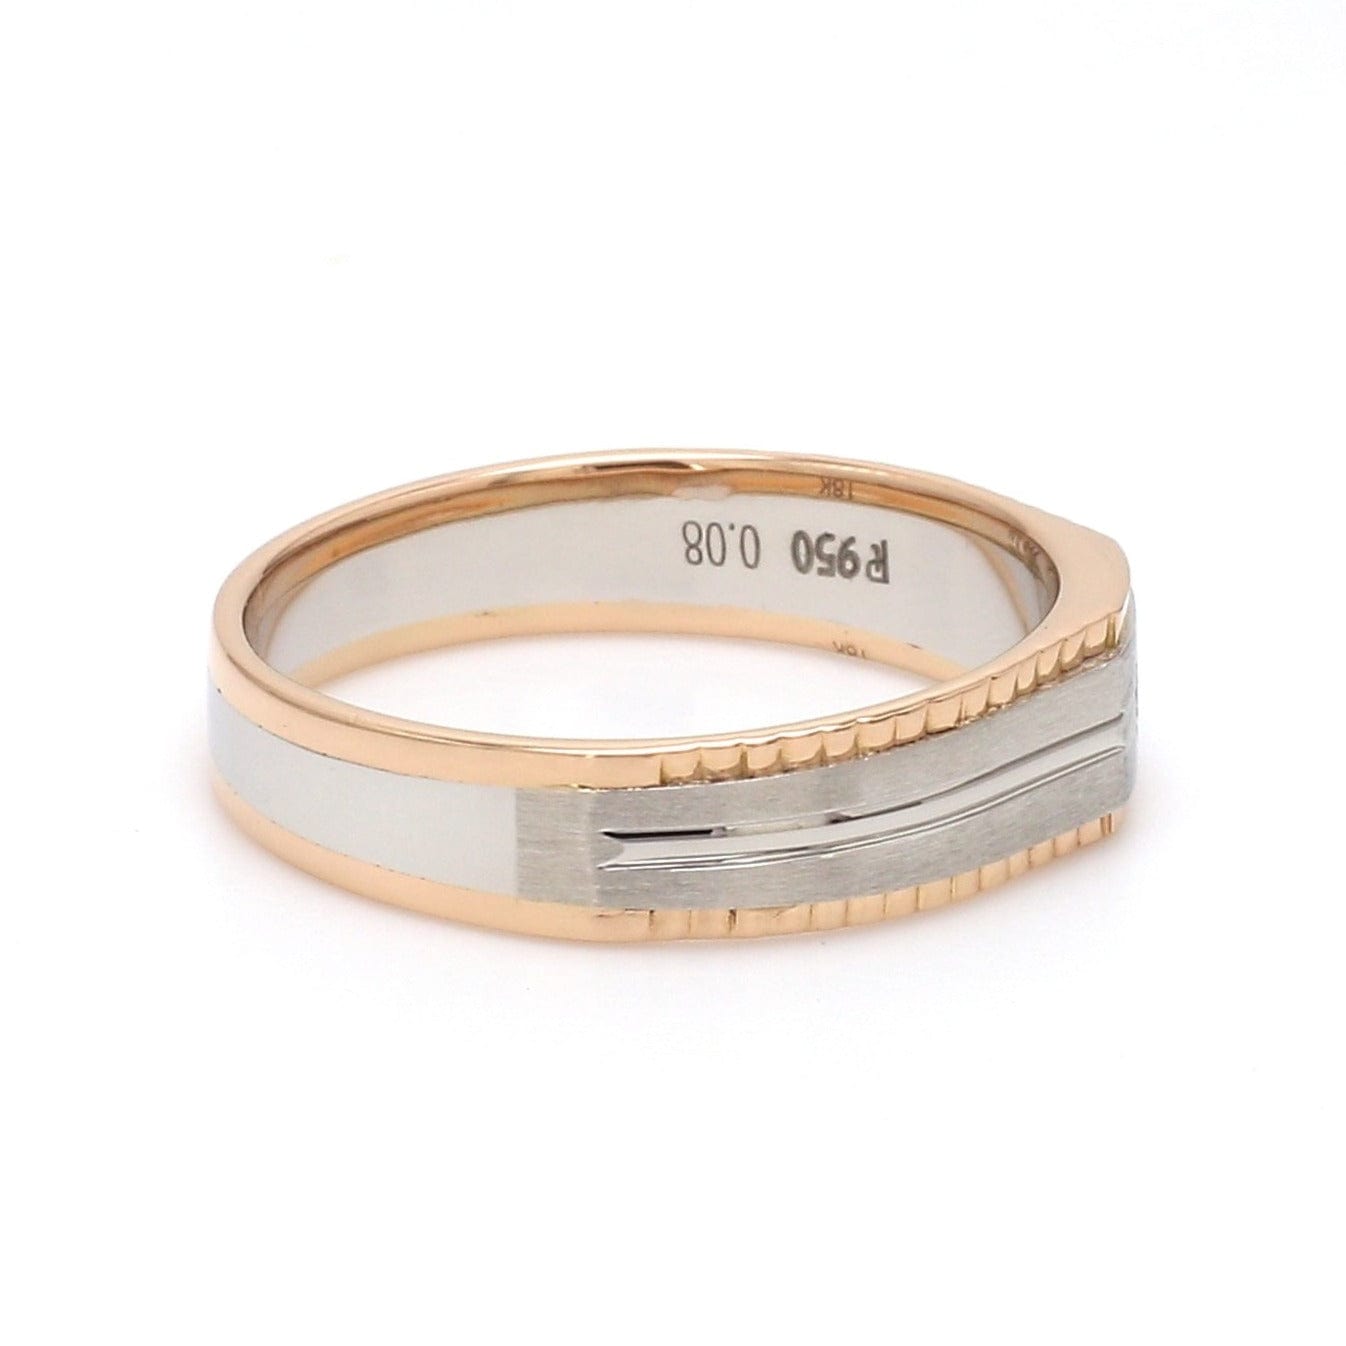 SUBARU ring size 22 mm (US 12 1/2) (FTR7Q3UAE) by ao_jewelry